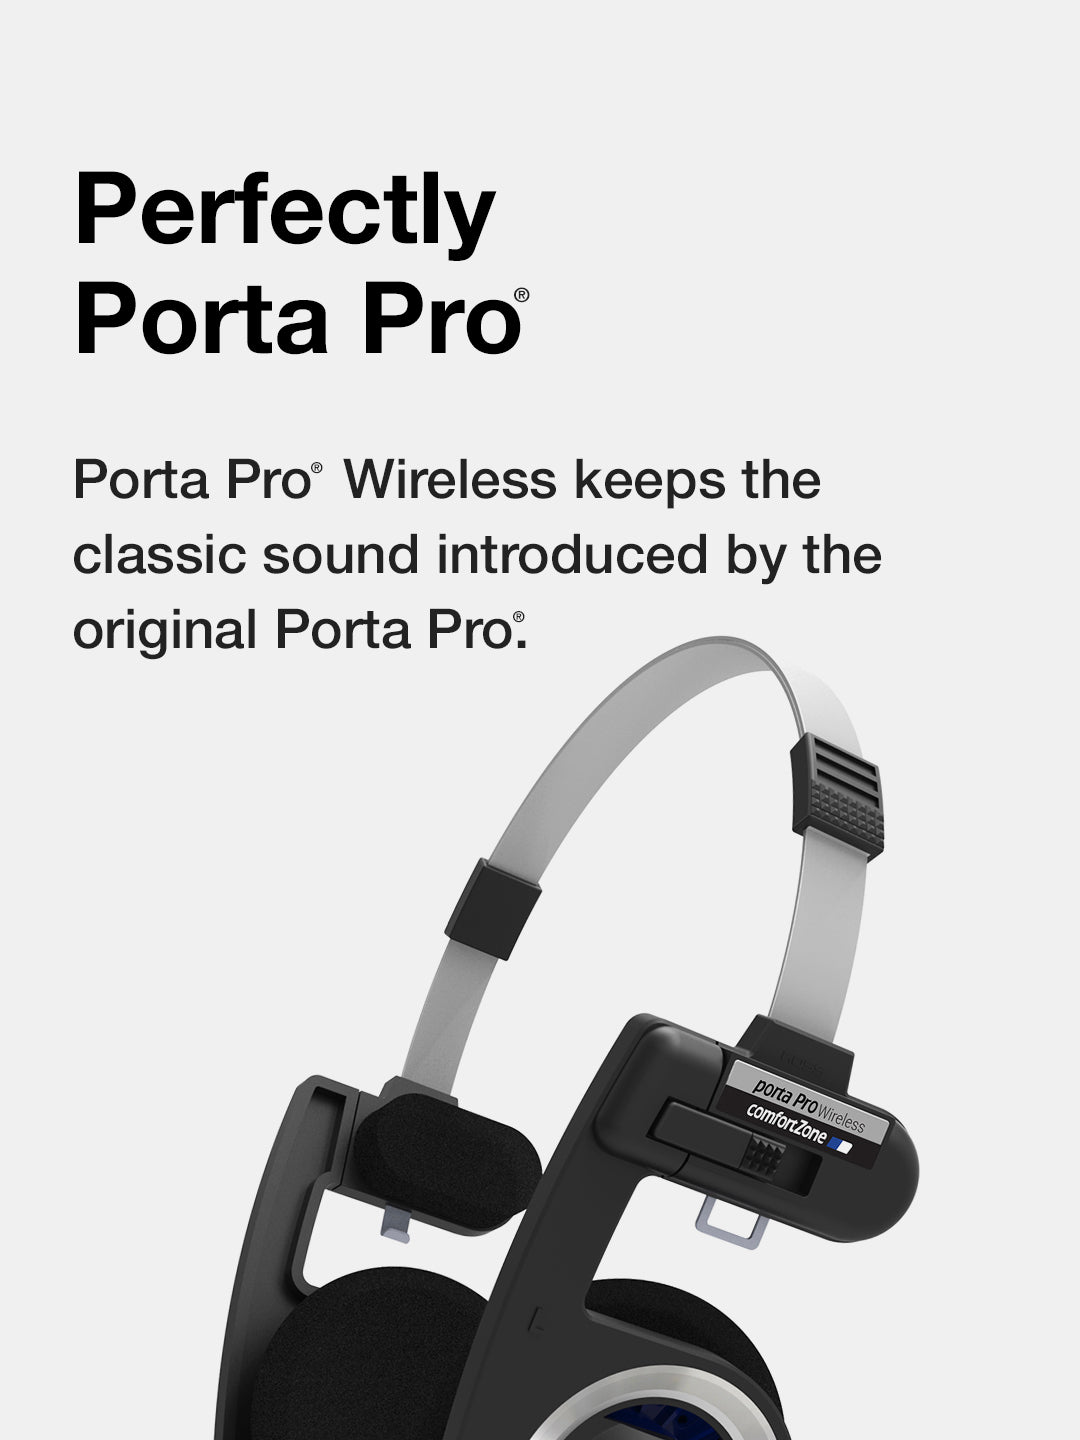 Koss Porta Pro® Collection